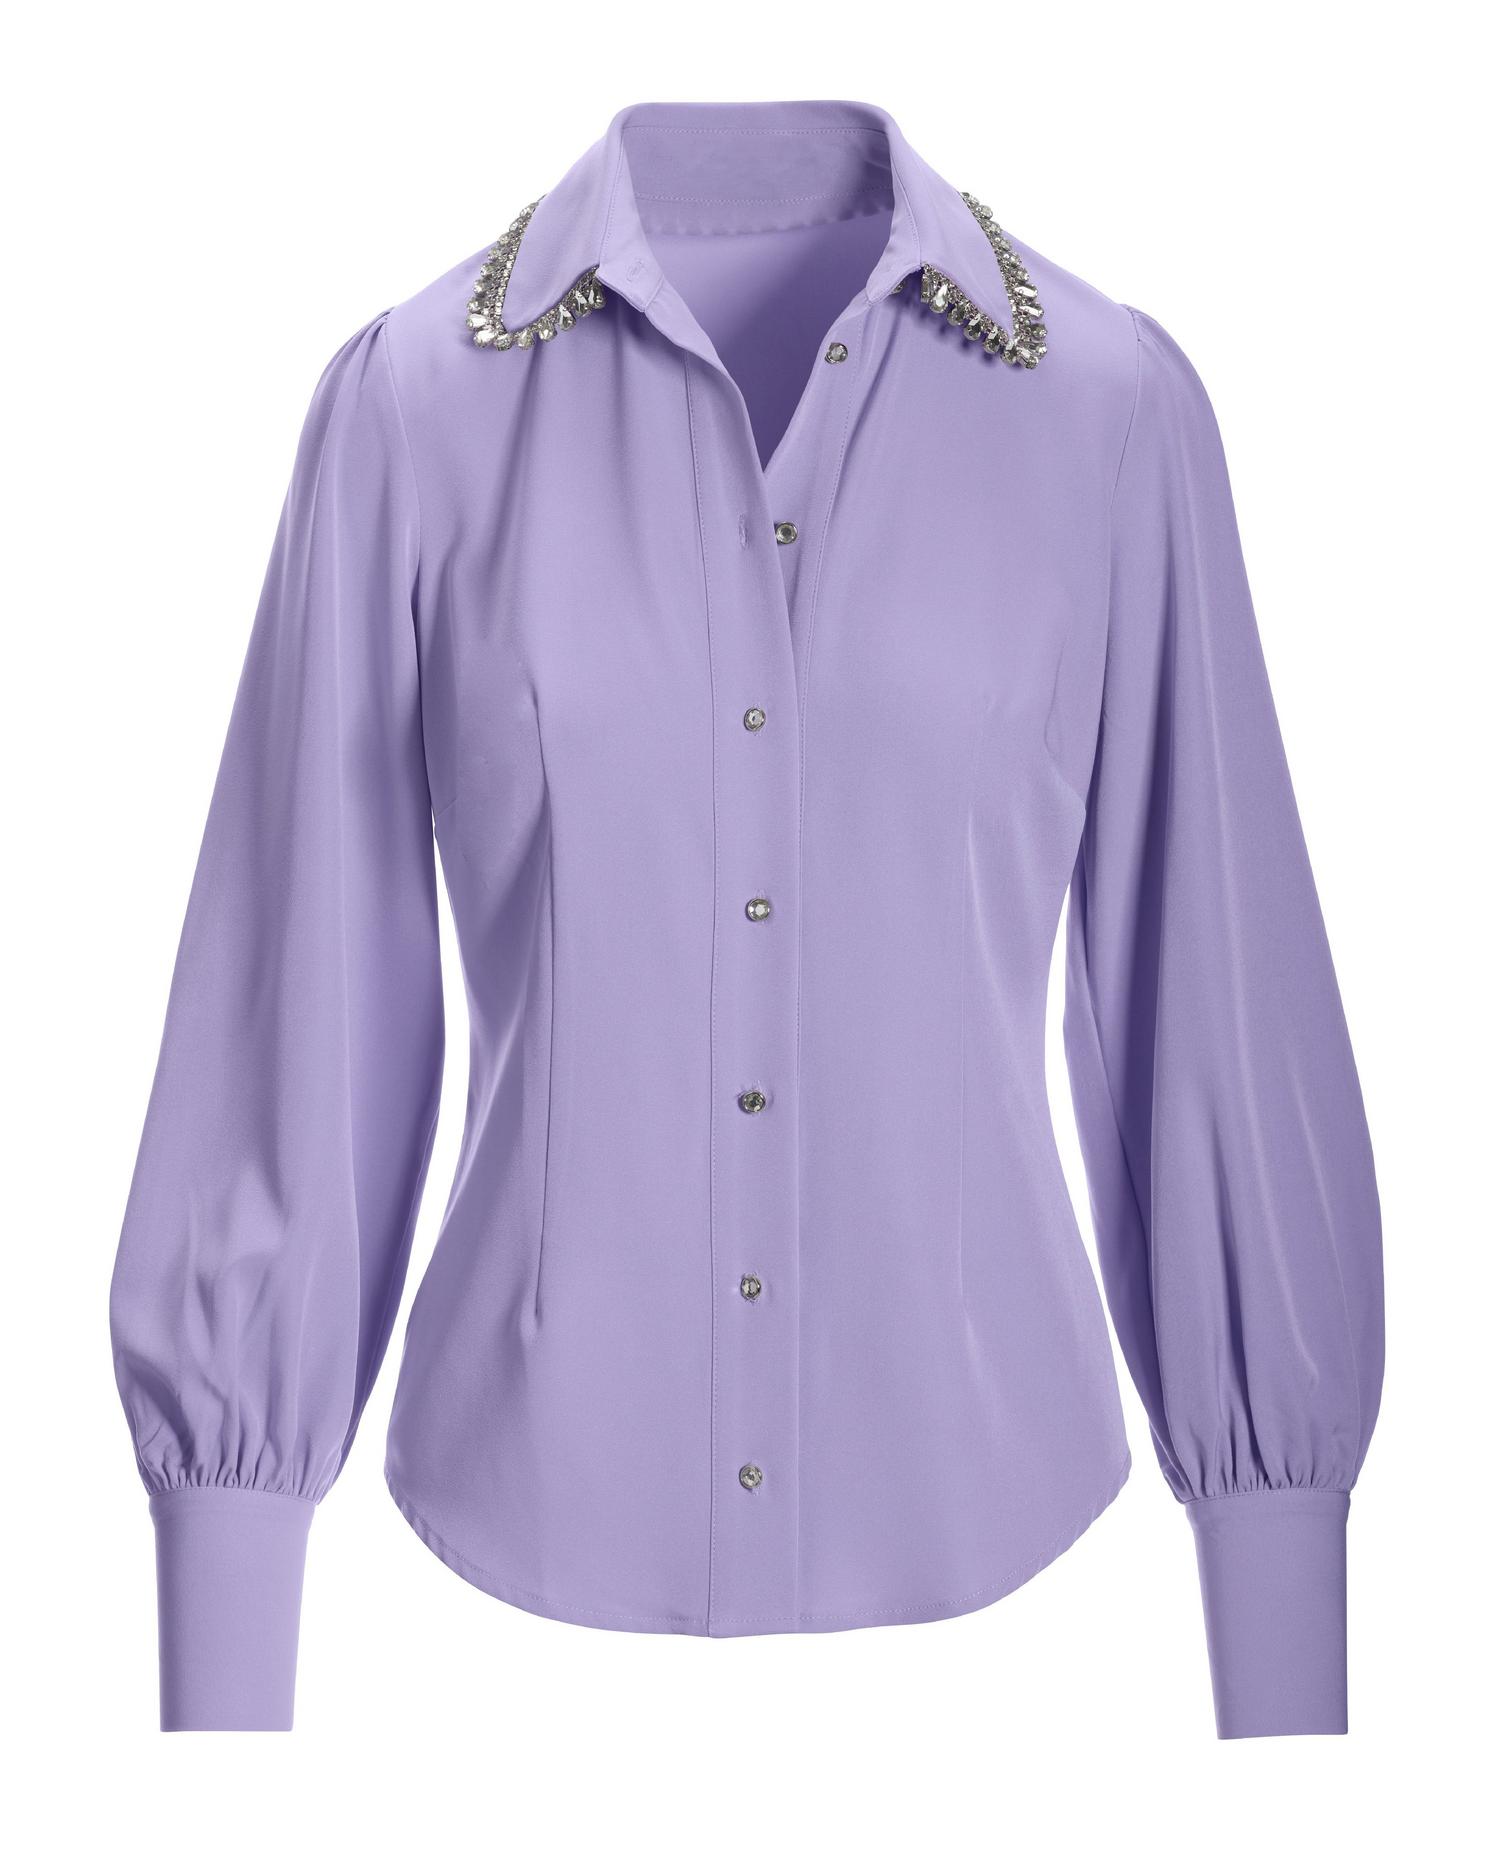 Embellished Blended Collar Neck Women's Casual Shirt